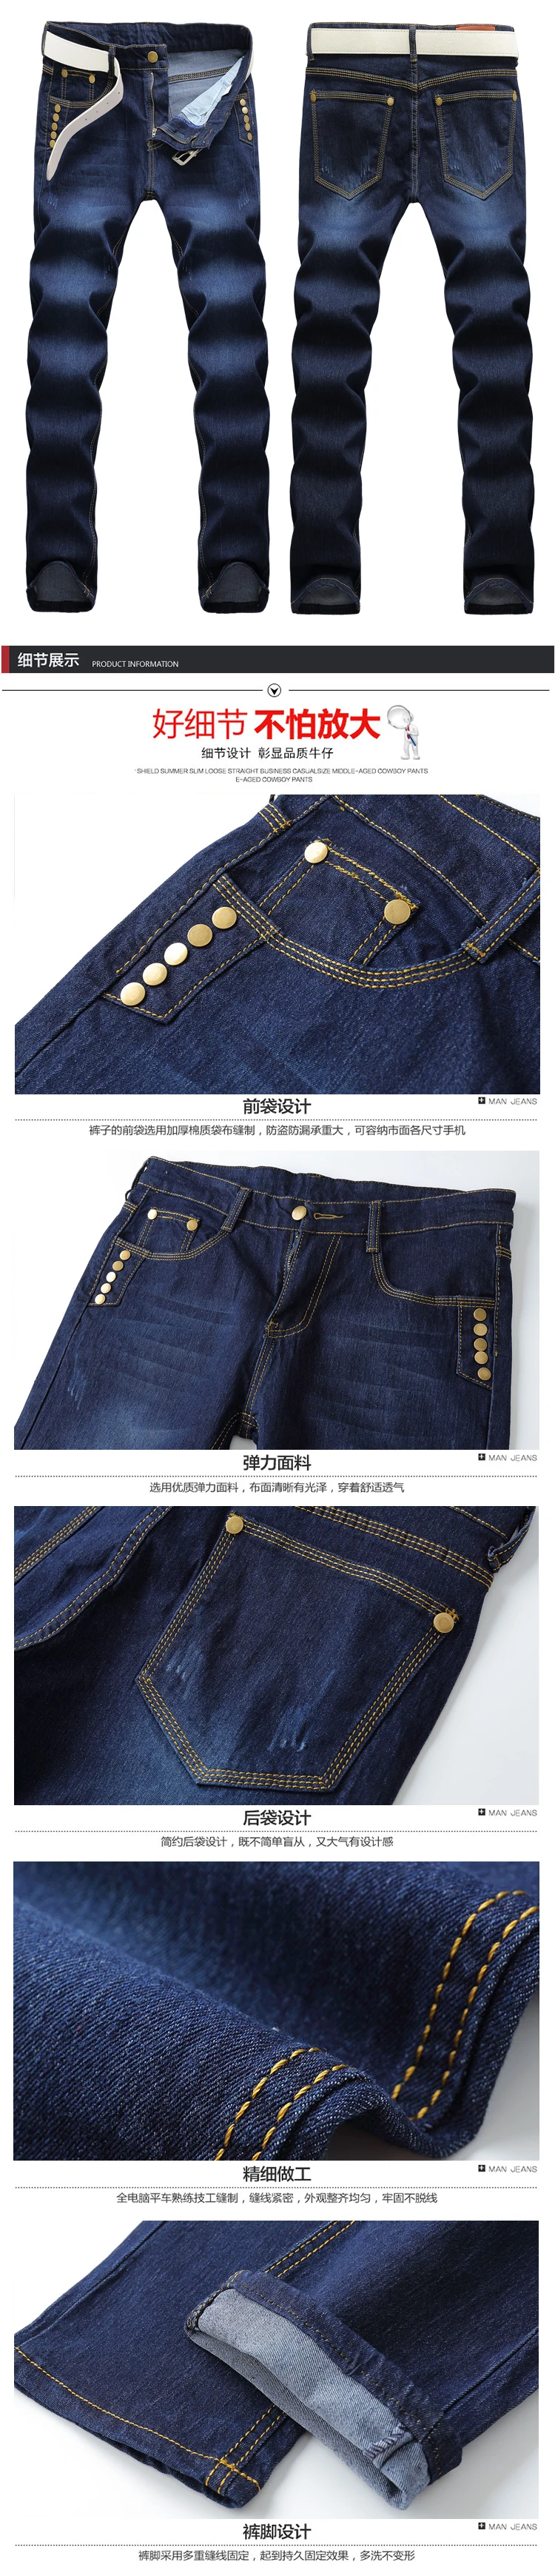 New Design Men's Slim Jacket Jeans Jacket Collocation Casual Handsome ...